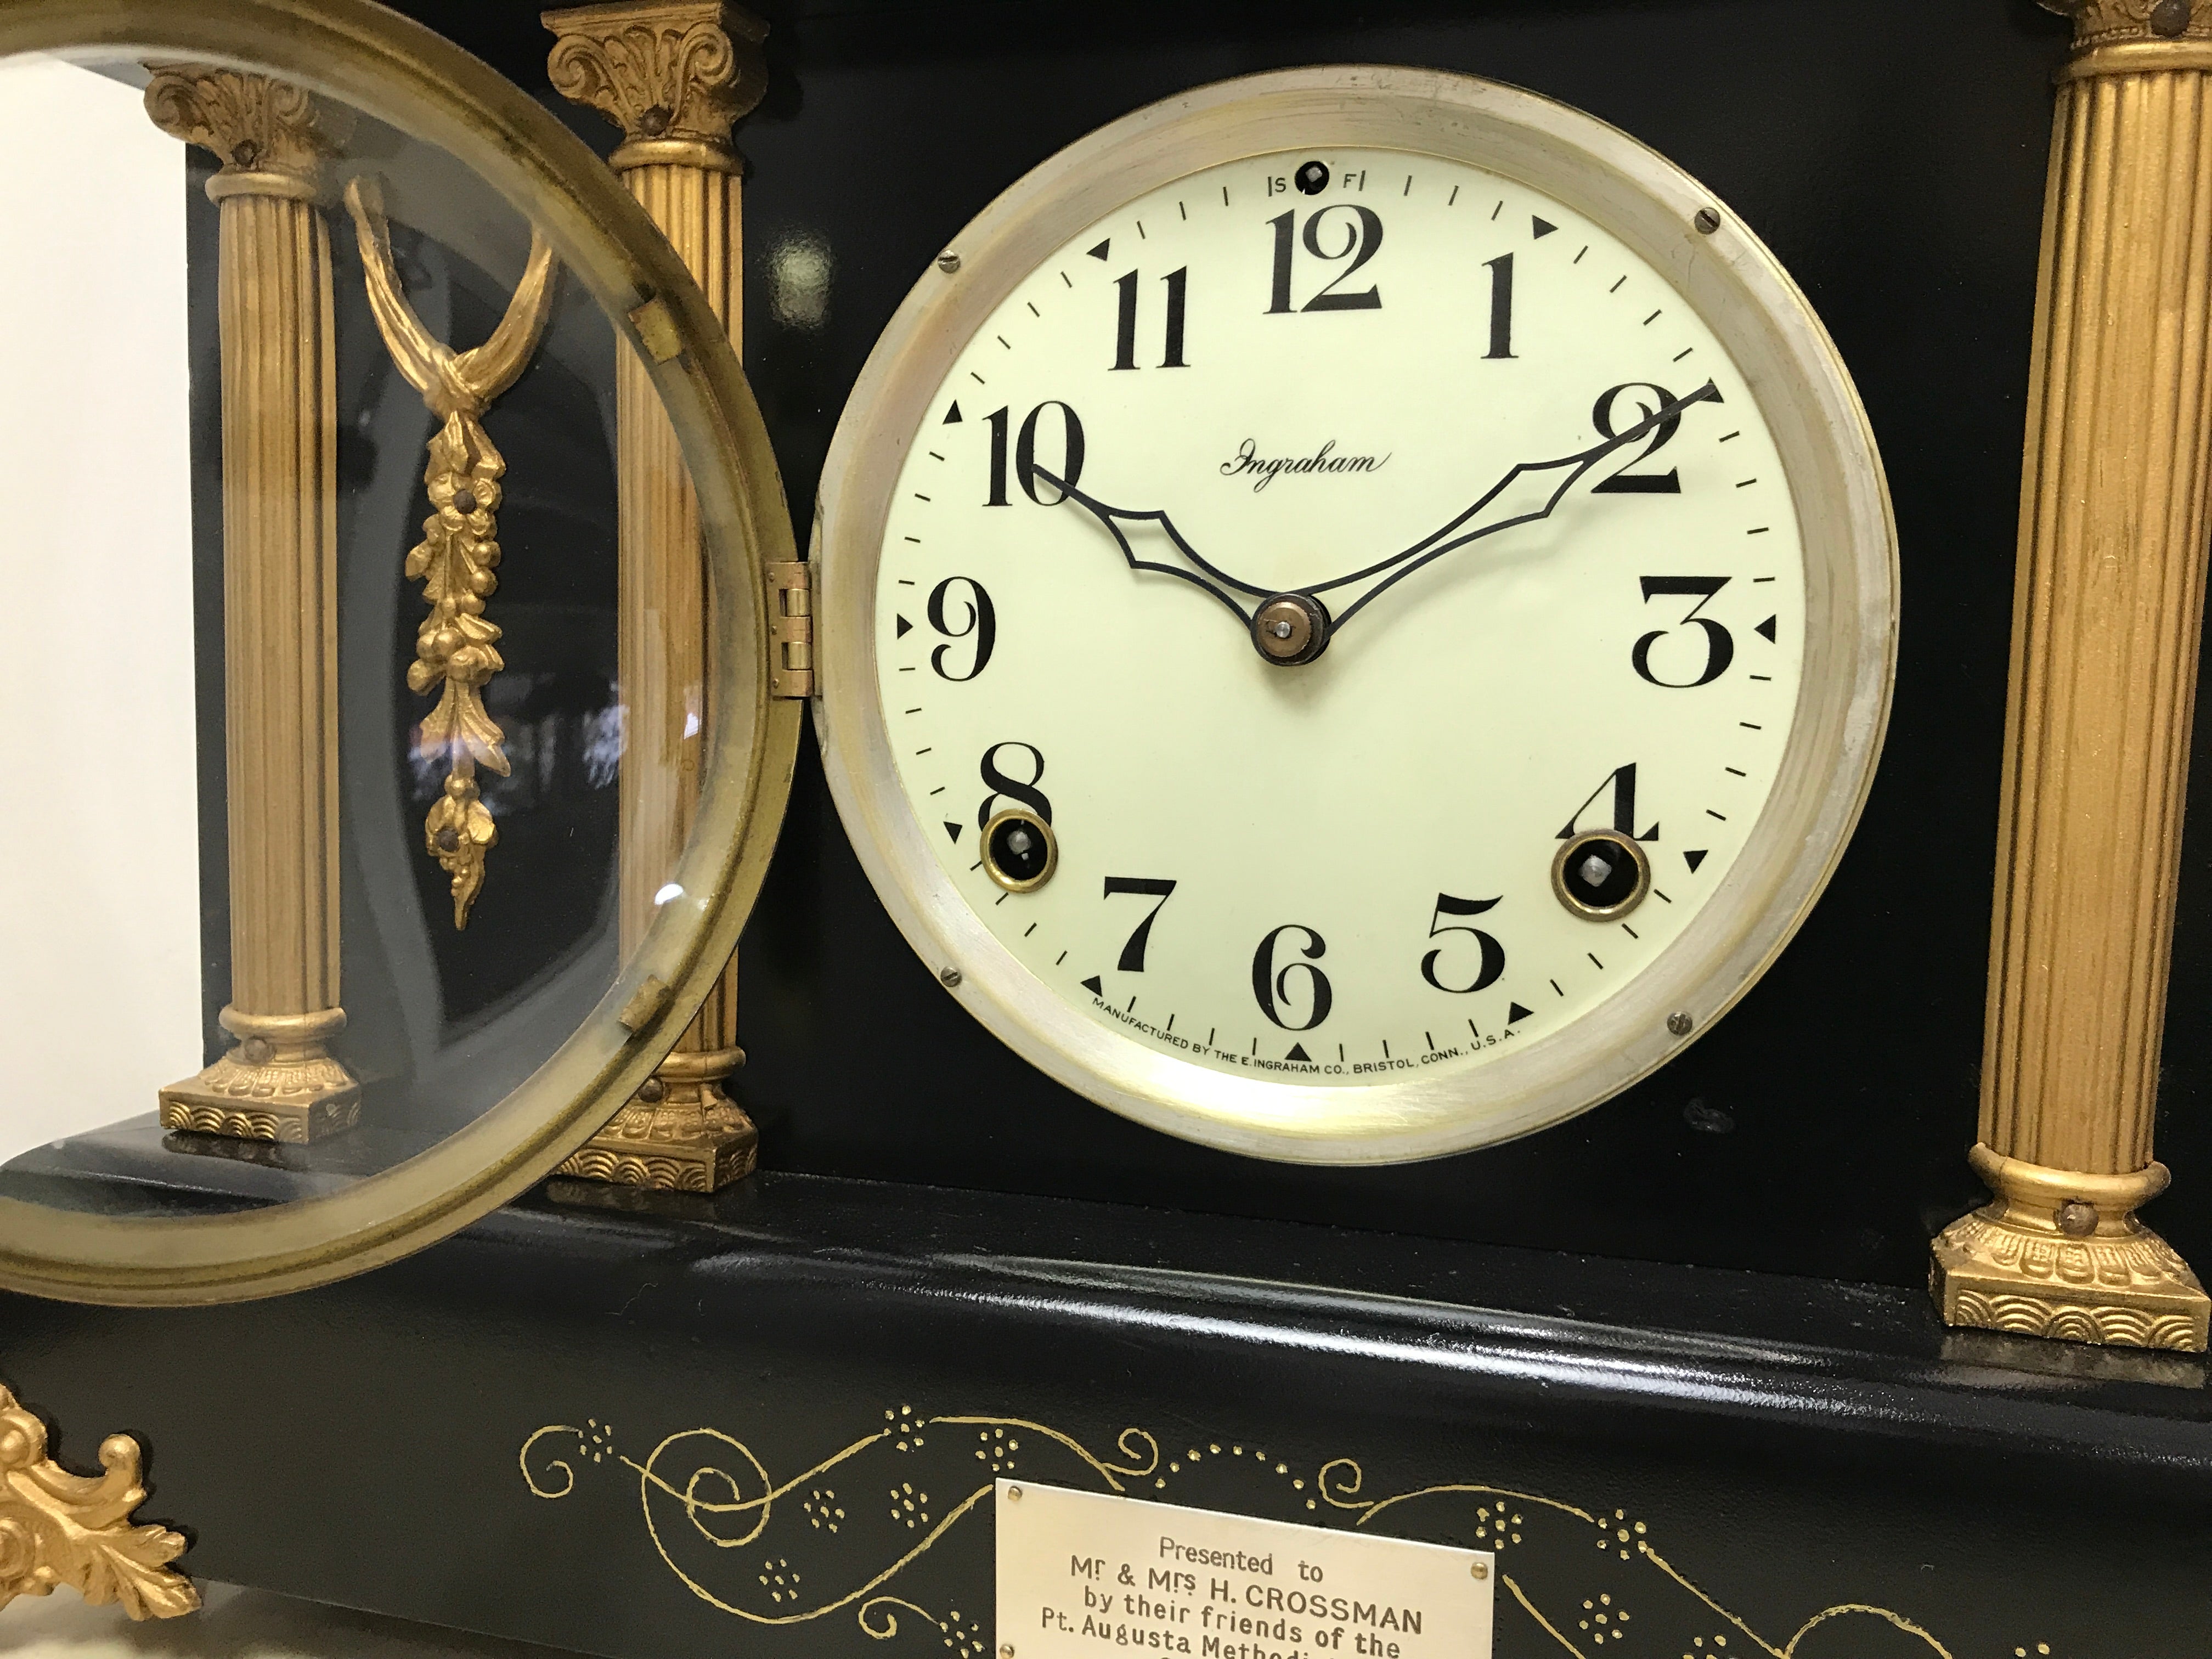 Antique Ingraham Mantel Clock | eXibit collection